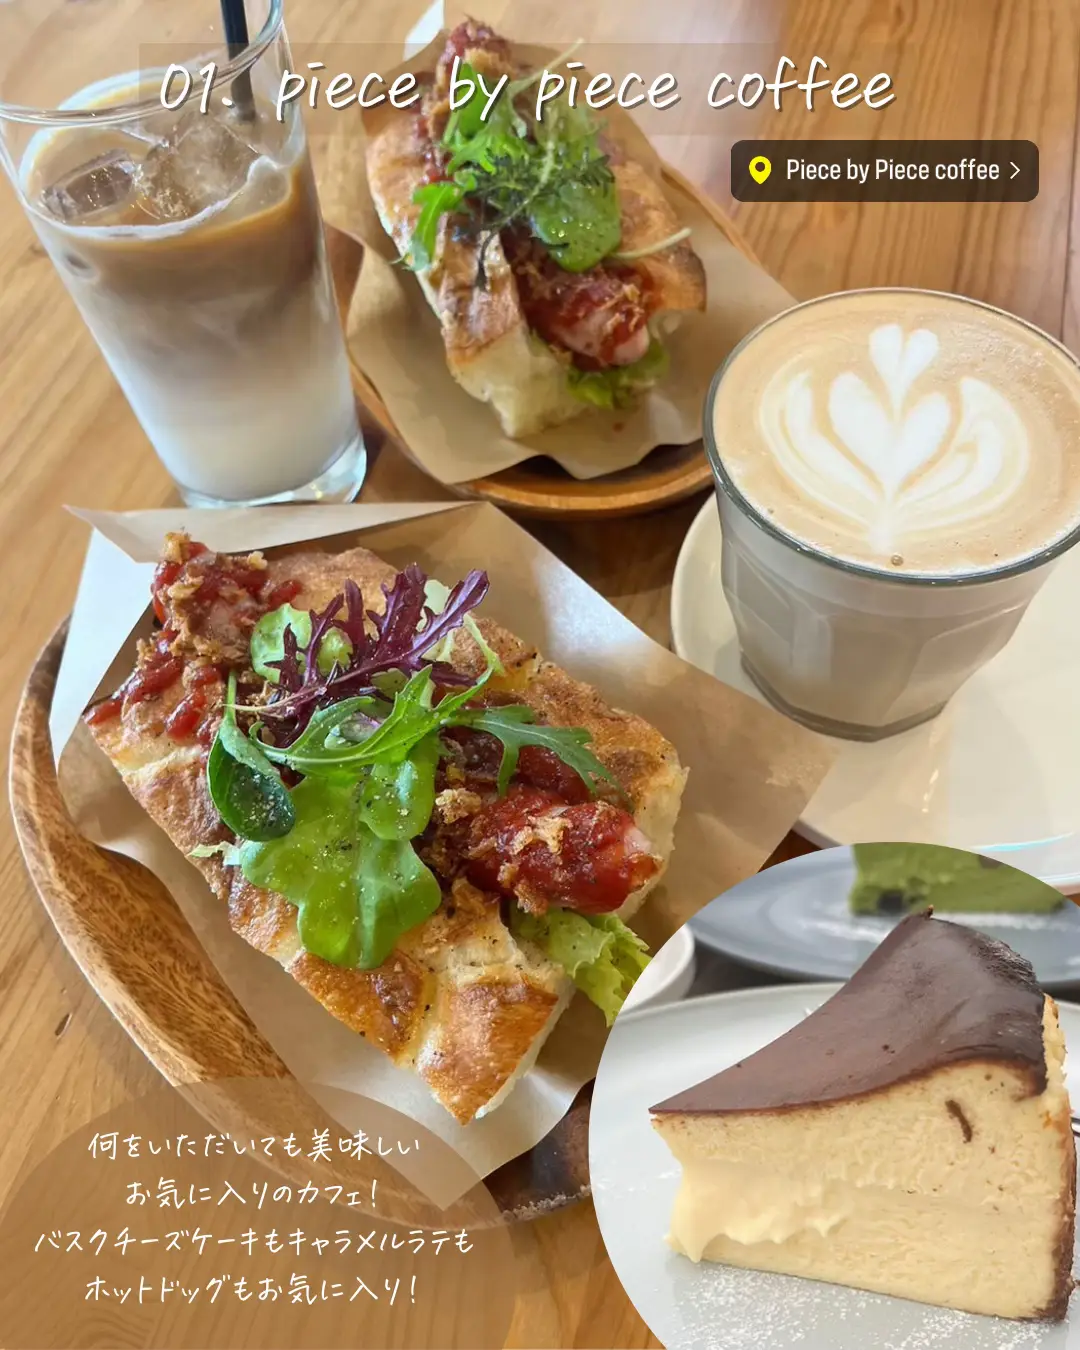 Best Cafes for Coffee in Jb - Lemon8検索